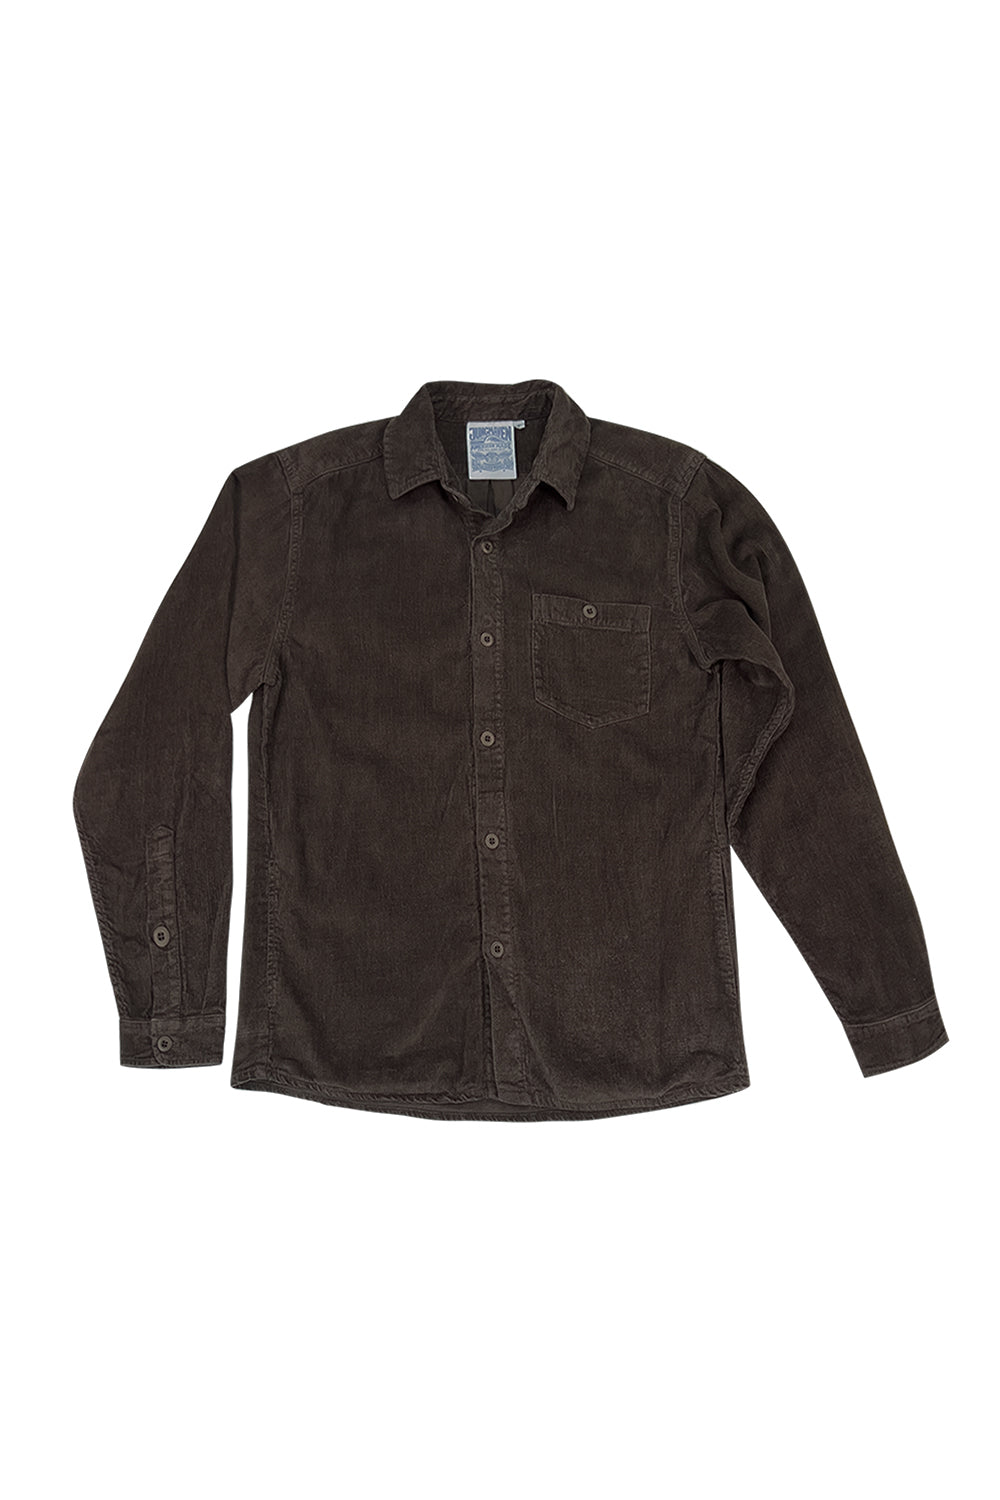 Oxnard Shirt Jacket | Jungmaven Hemp Clothing & Accessories Color: Coffee Bean